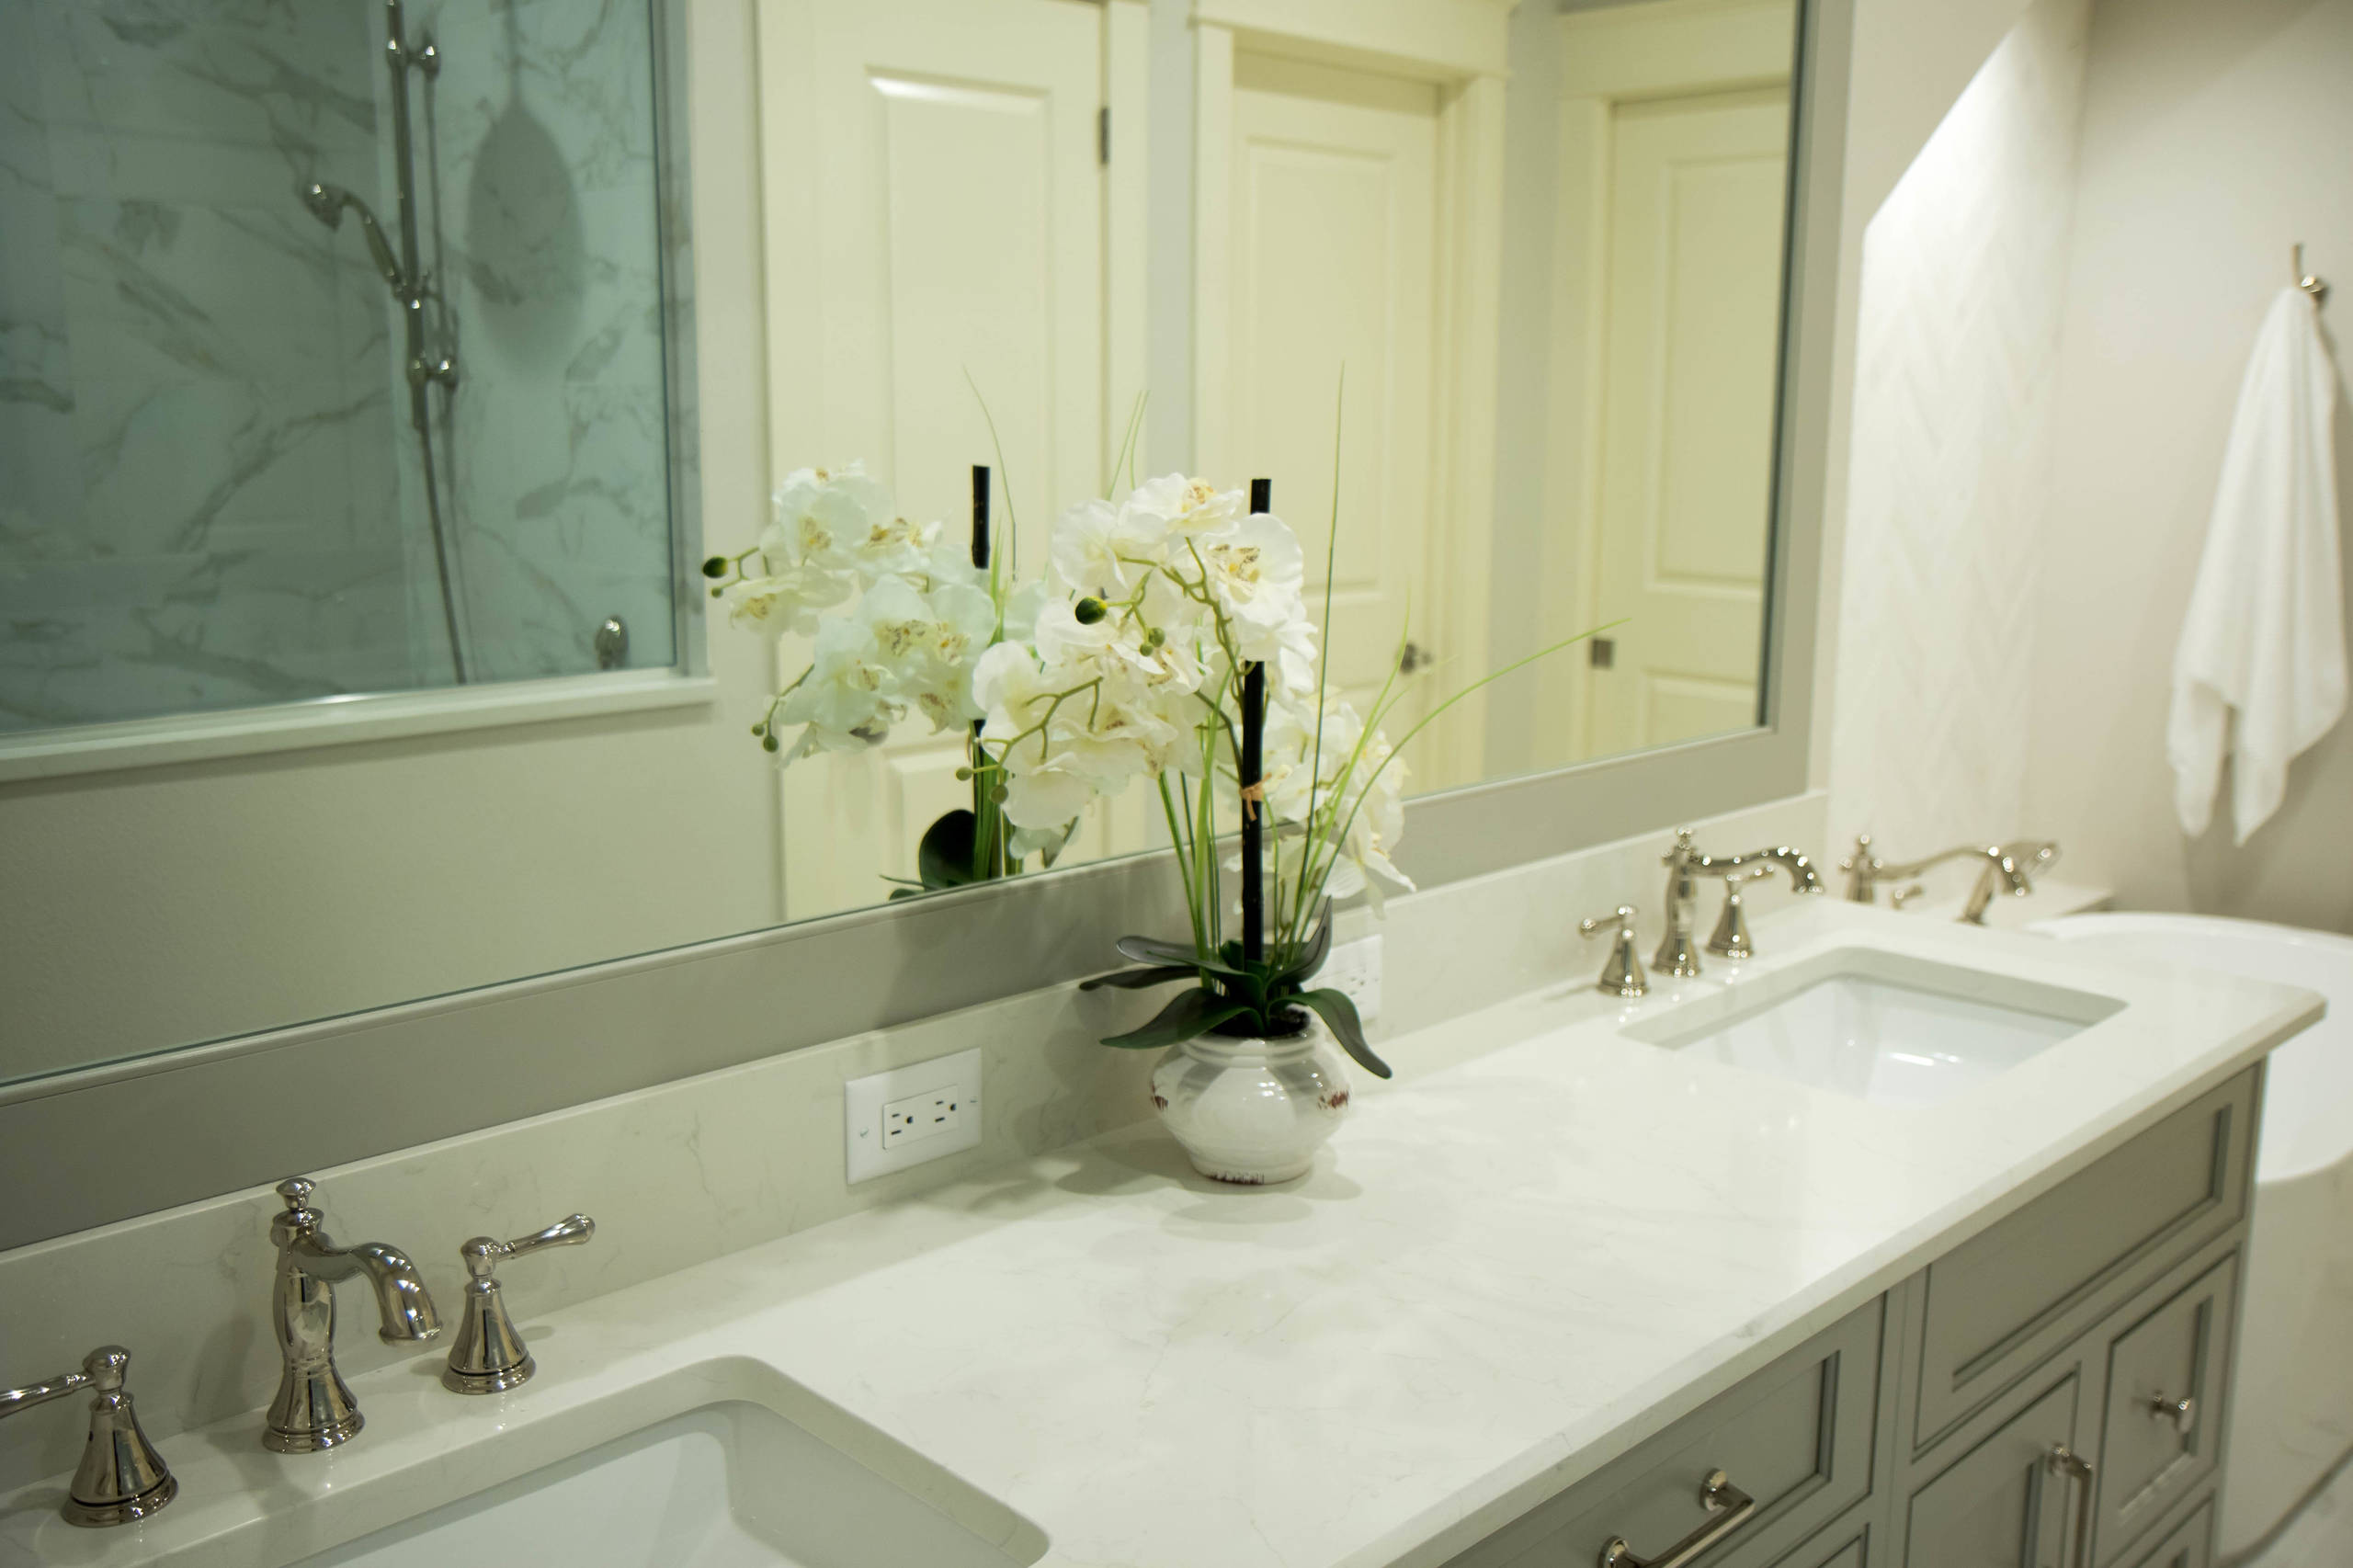 Galley Master Bathroom Remodel Transitional Bathroom Orlando By Kbf Design Gallery Houzz